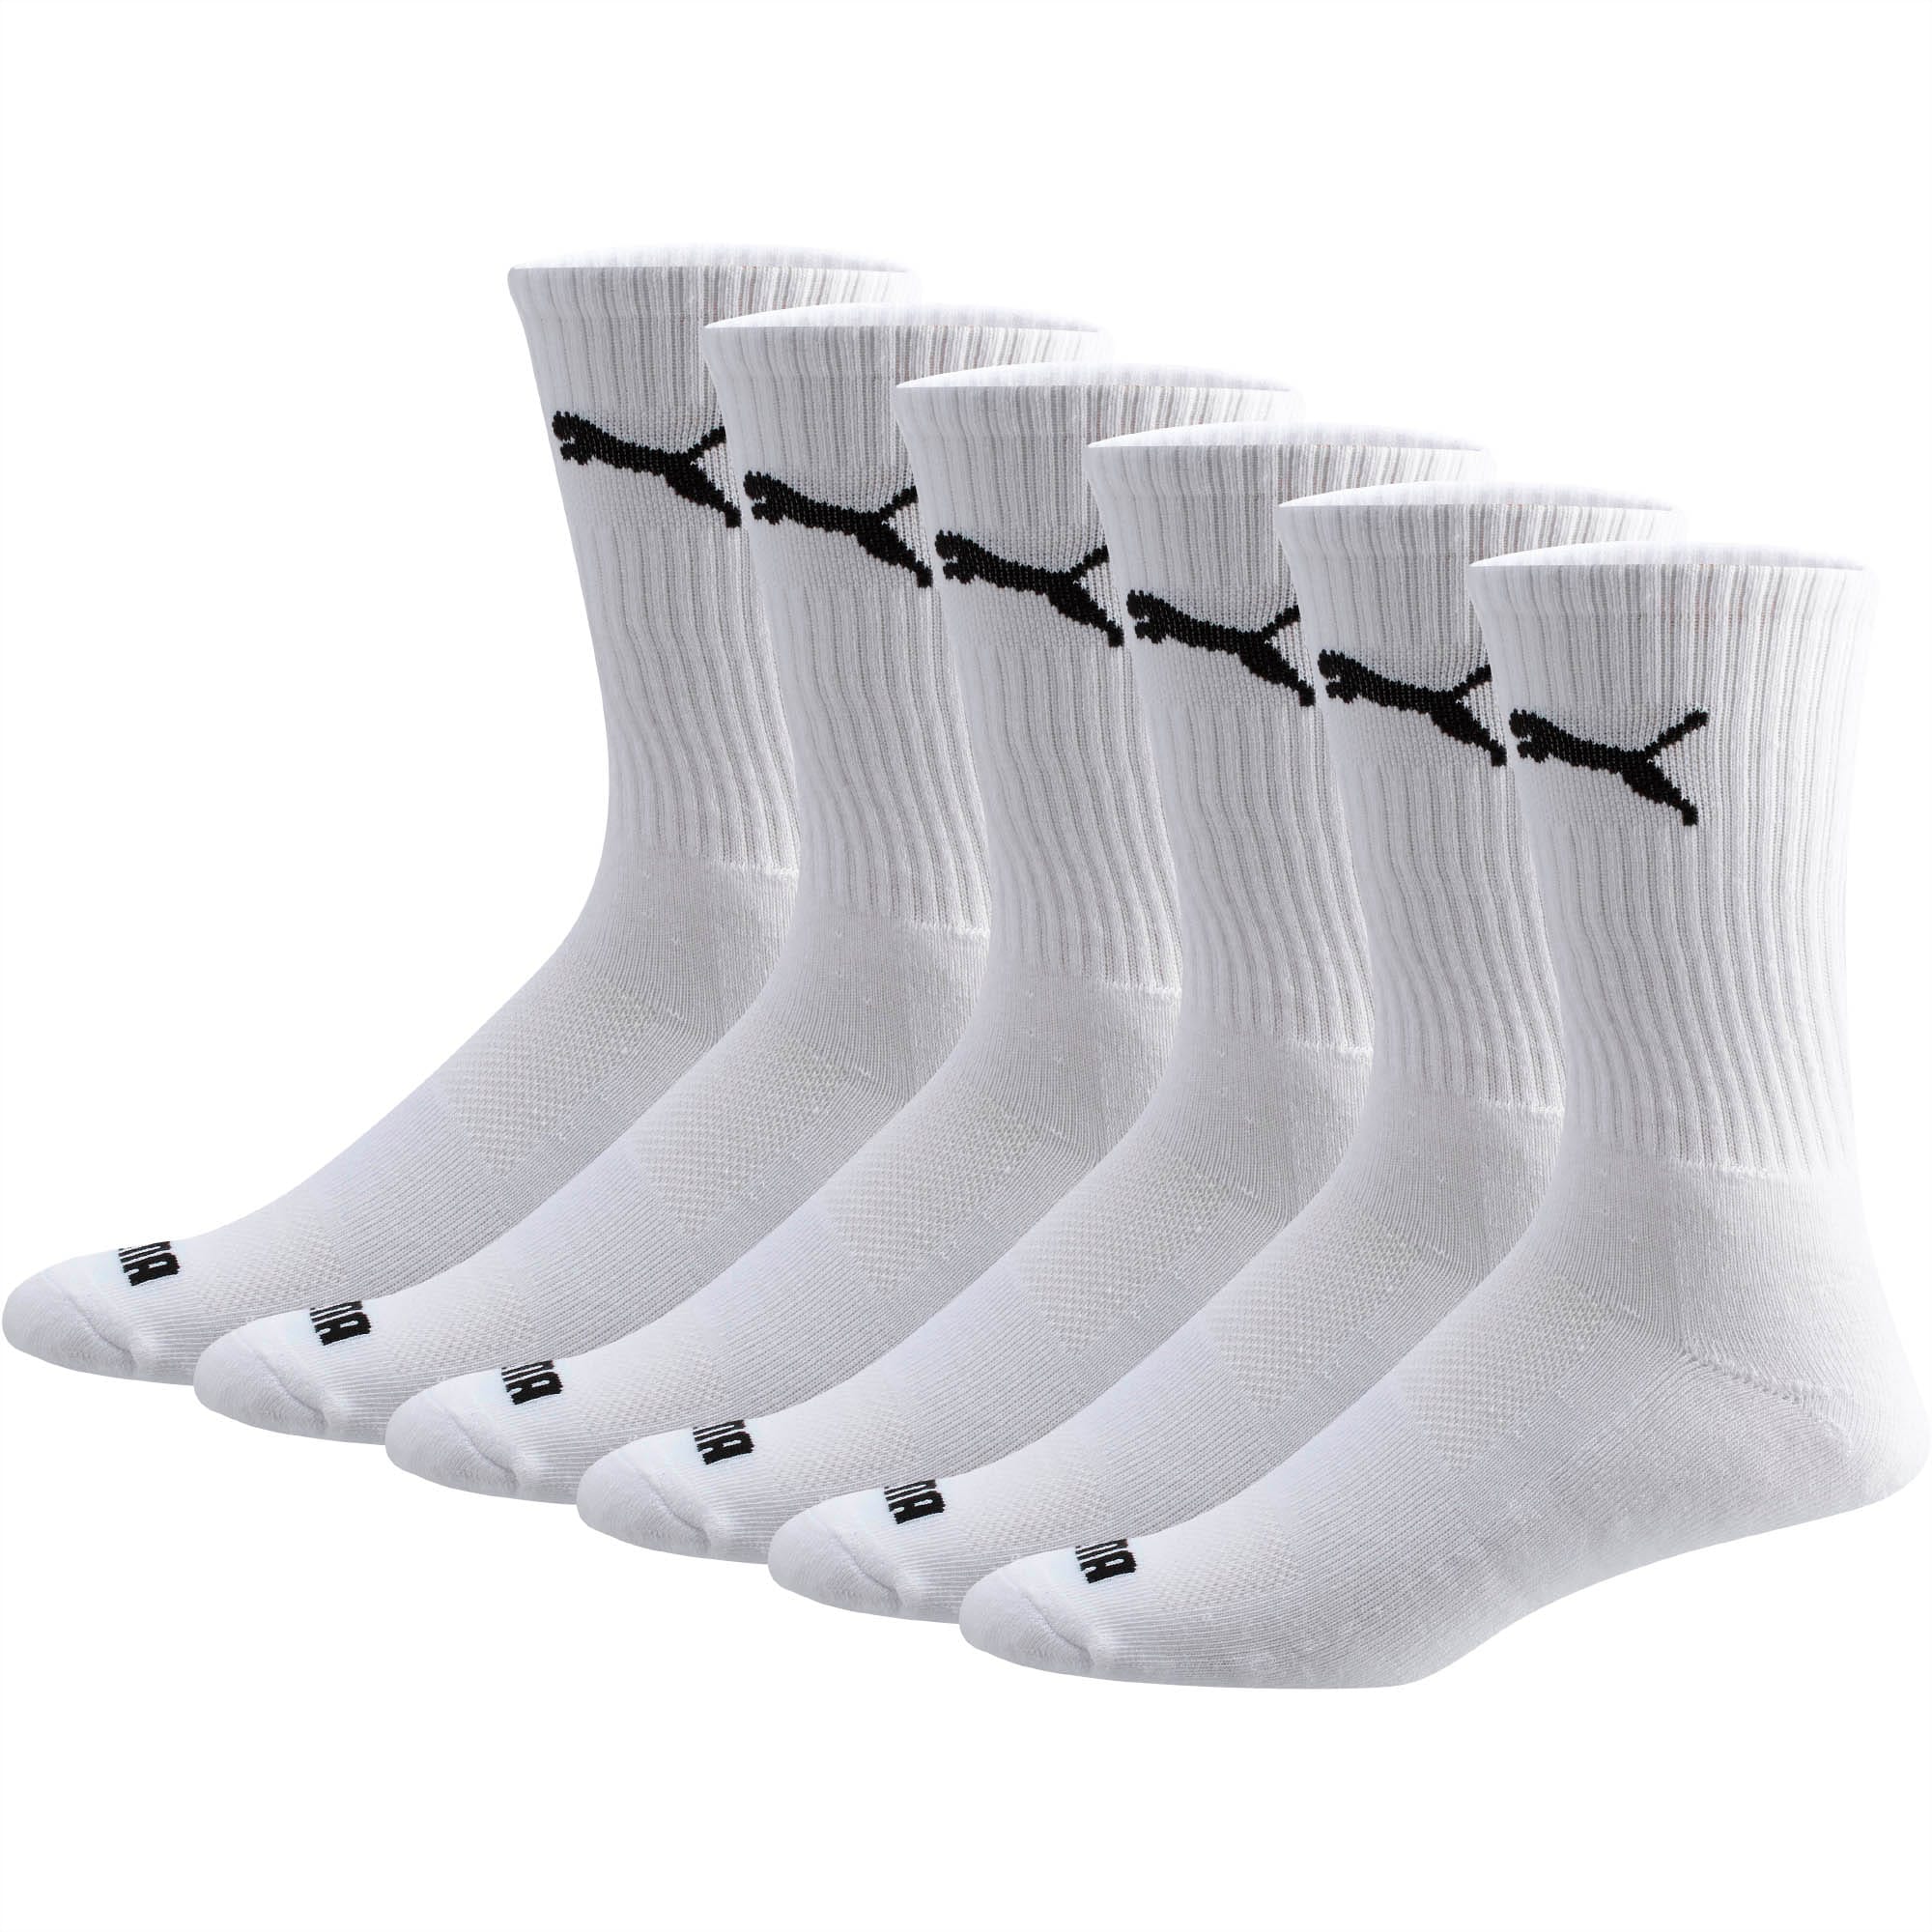 puma cotton socks